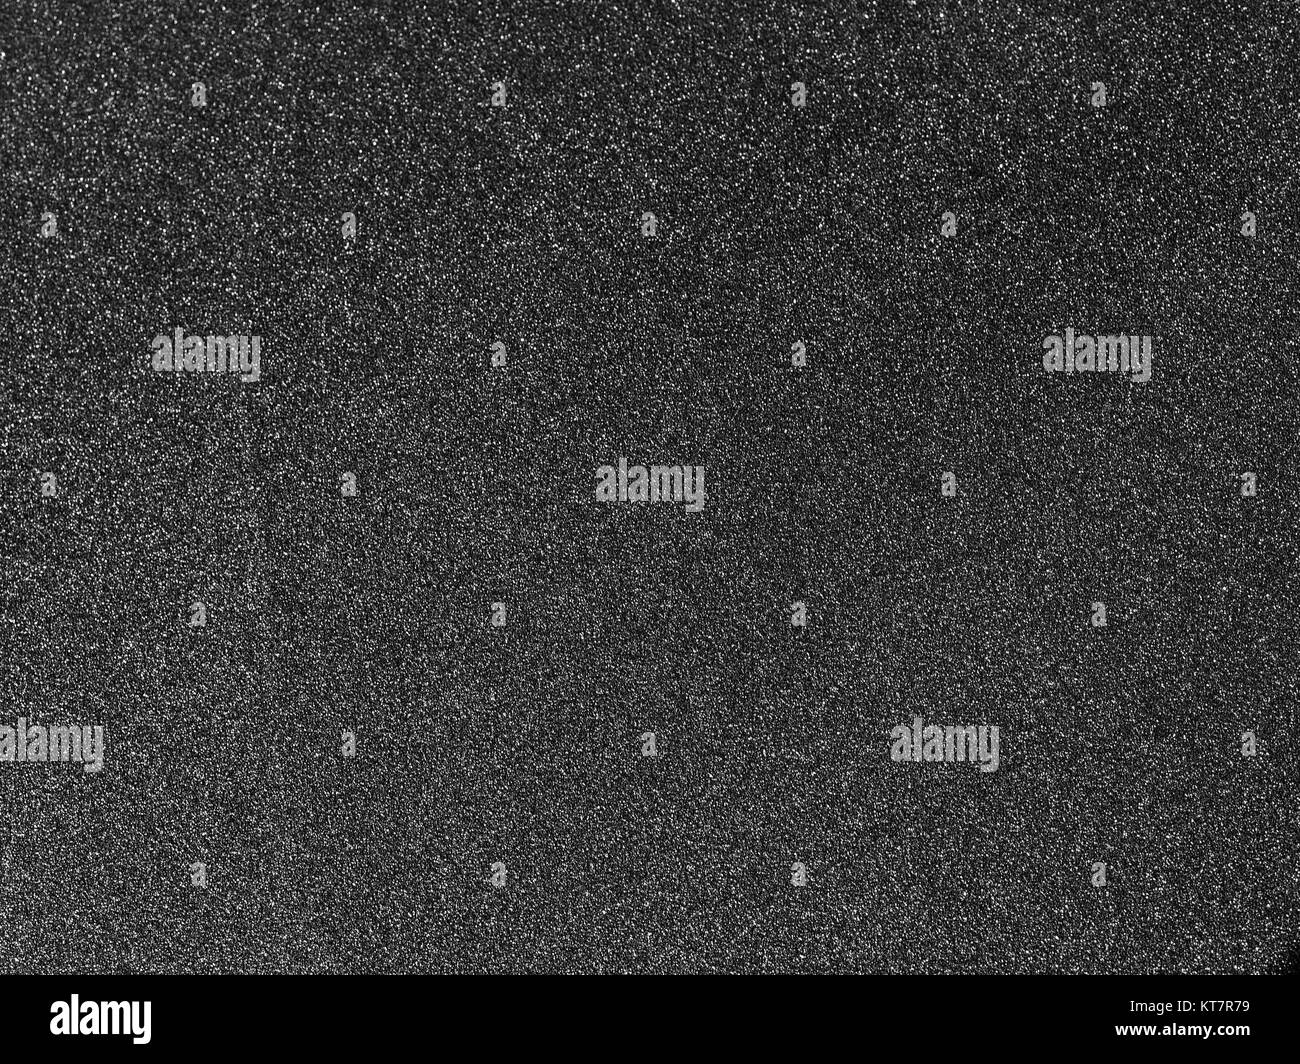 Papel de lija negro textura del fondo Fotografía de stock - Alamy